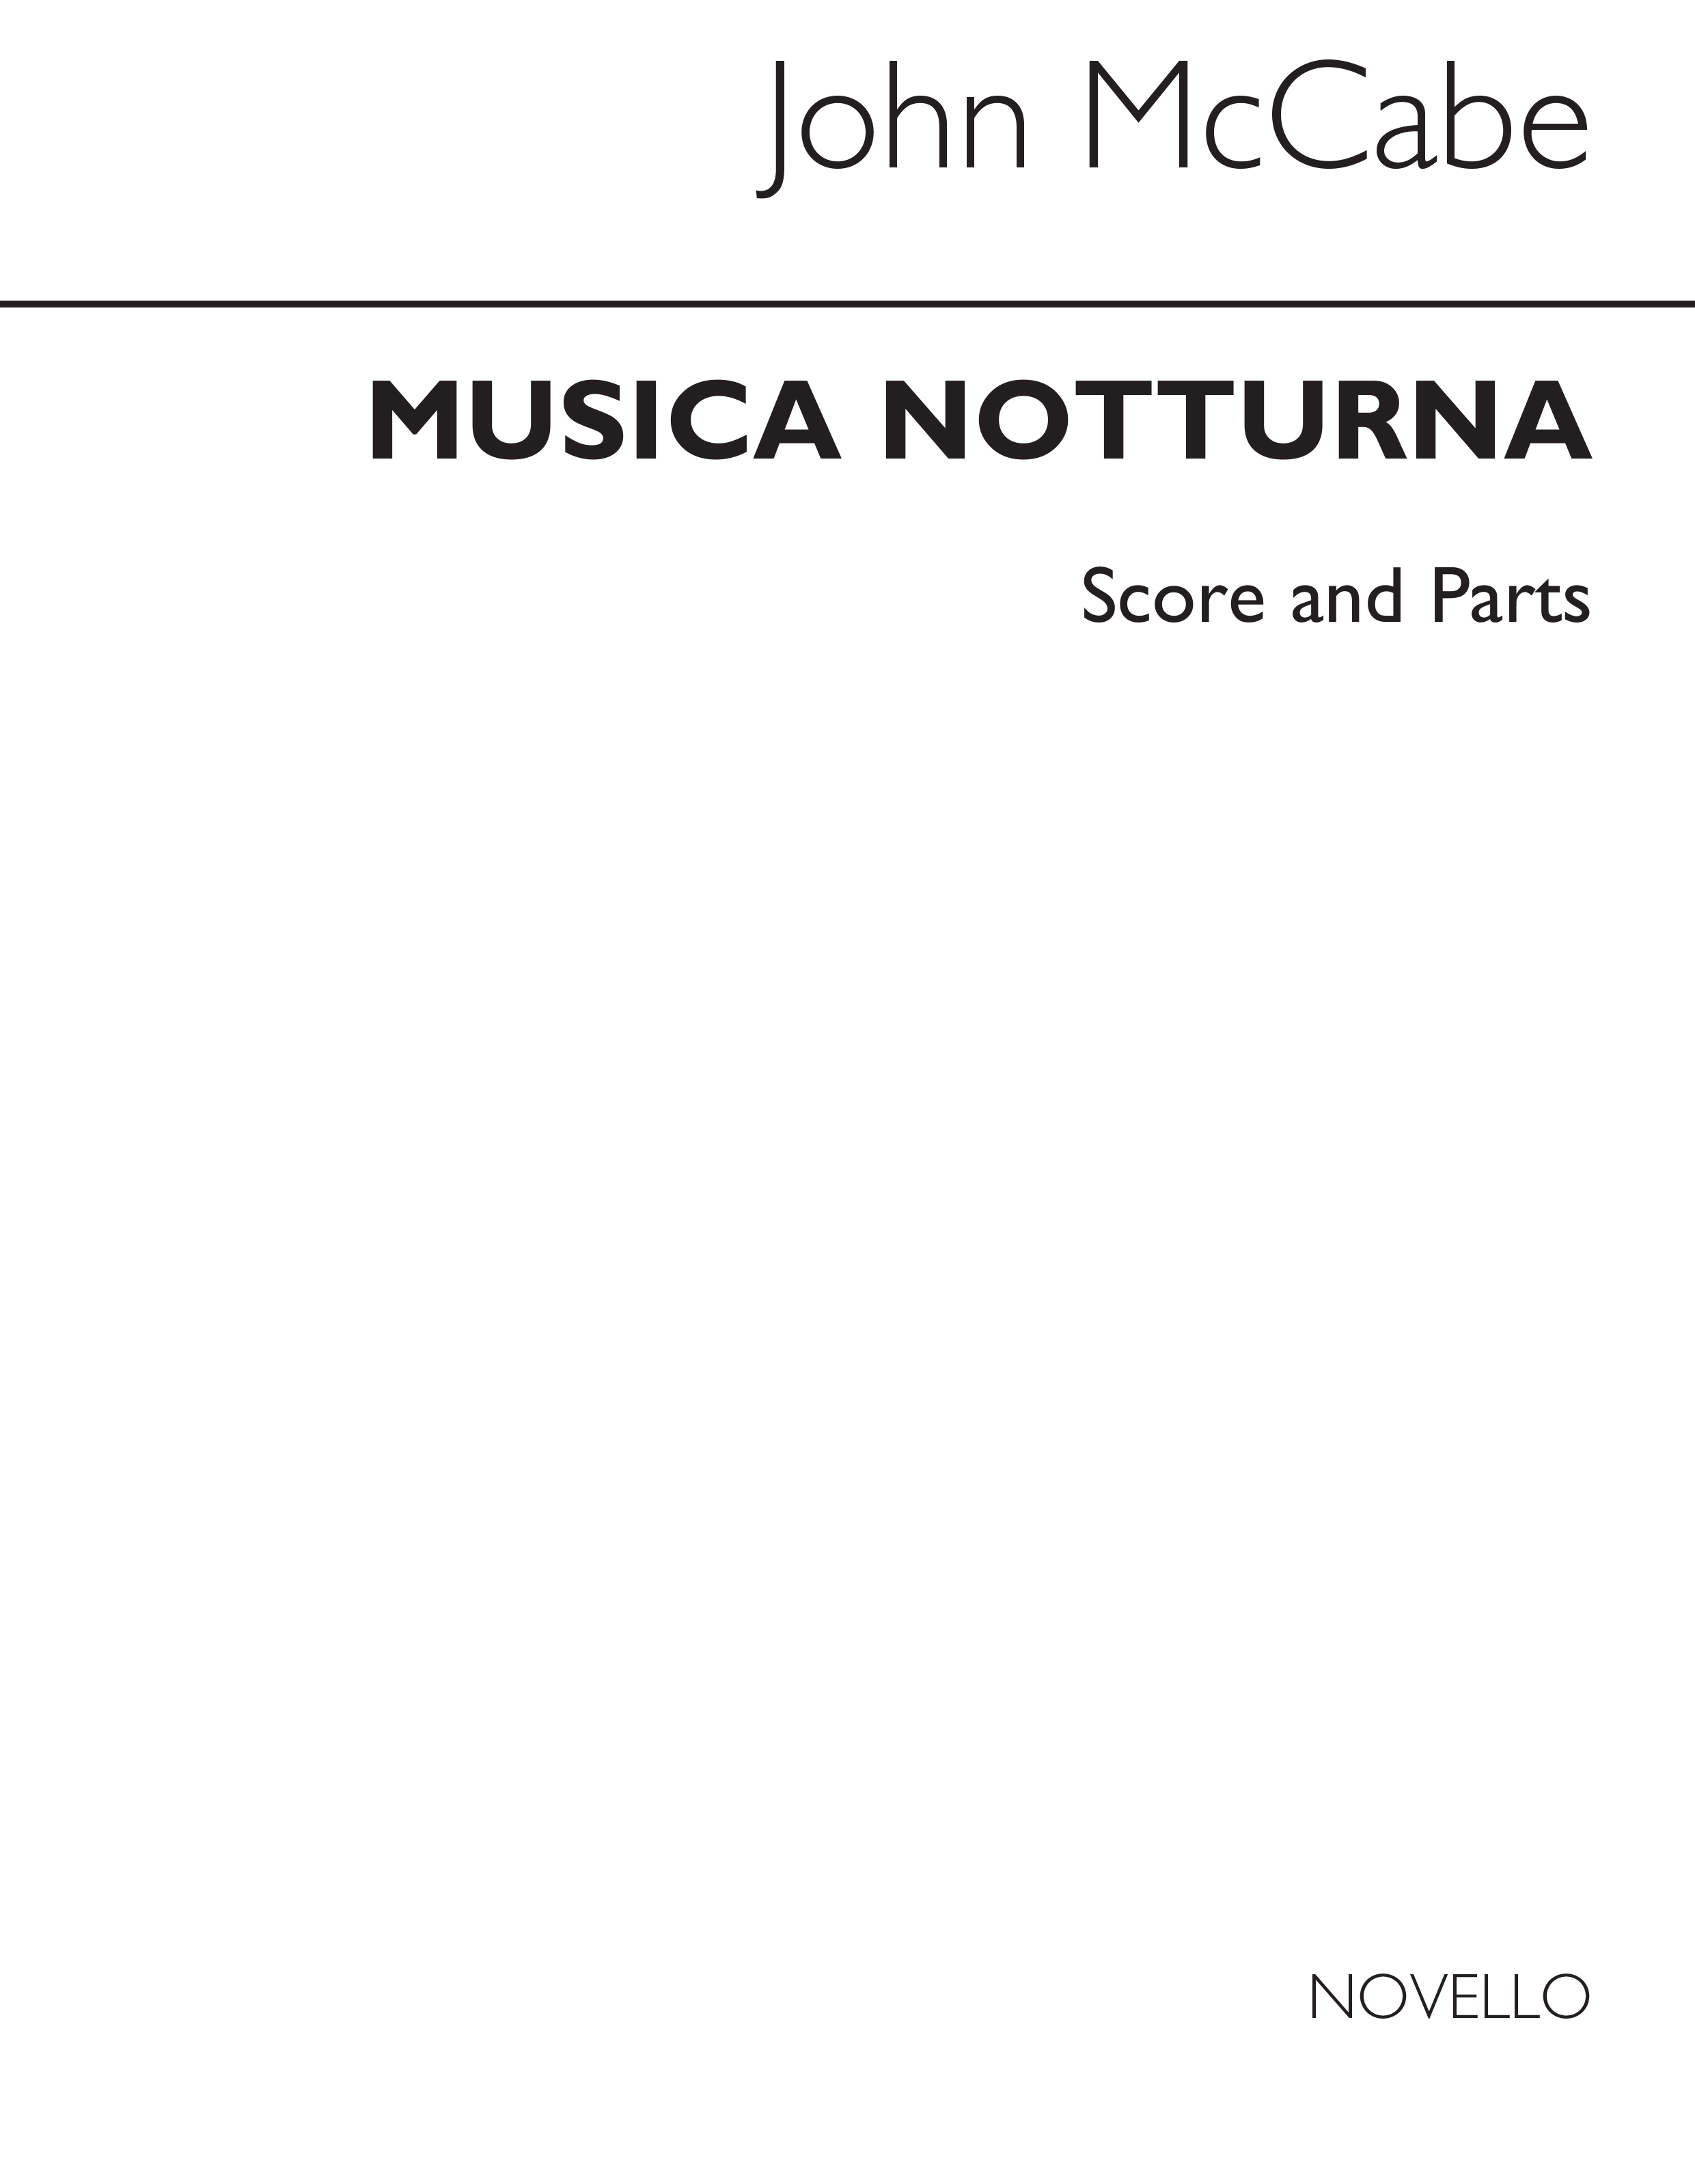 McCabe: Musica Notturna (Score and Parts)